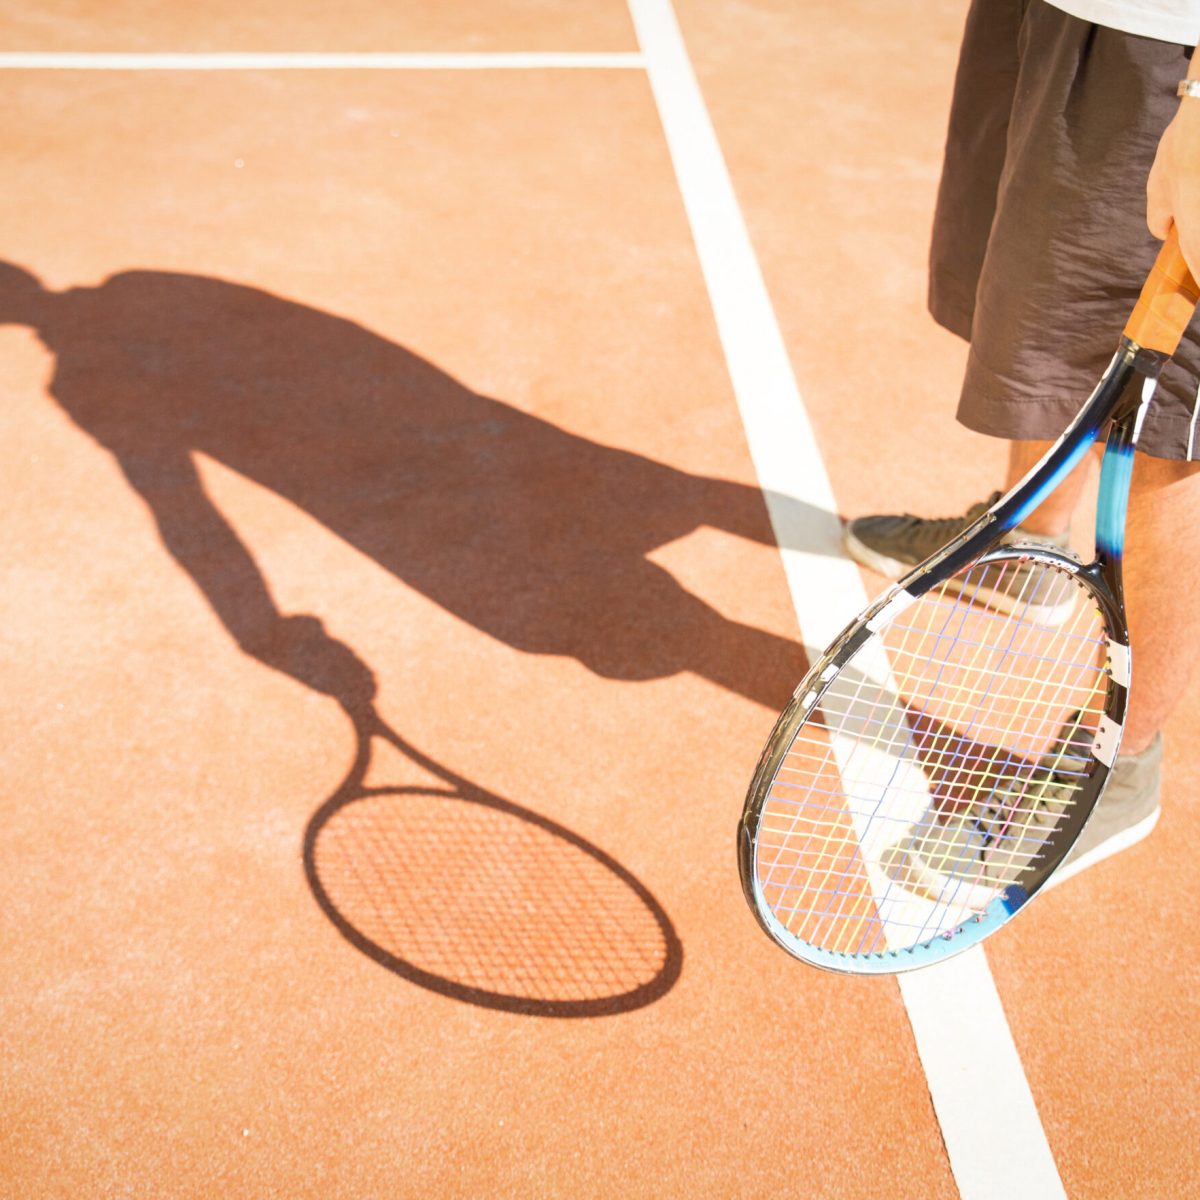 tennis-player-2022-01-18-23-33-08-utc-scaled.jpg